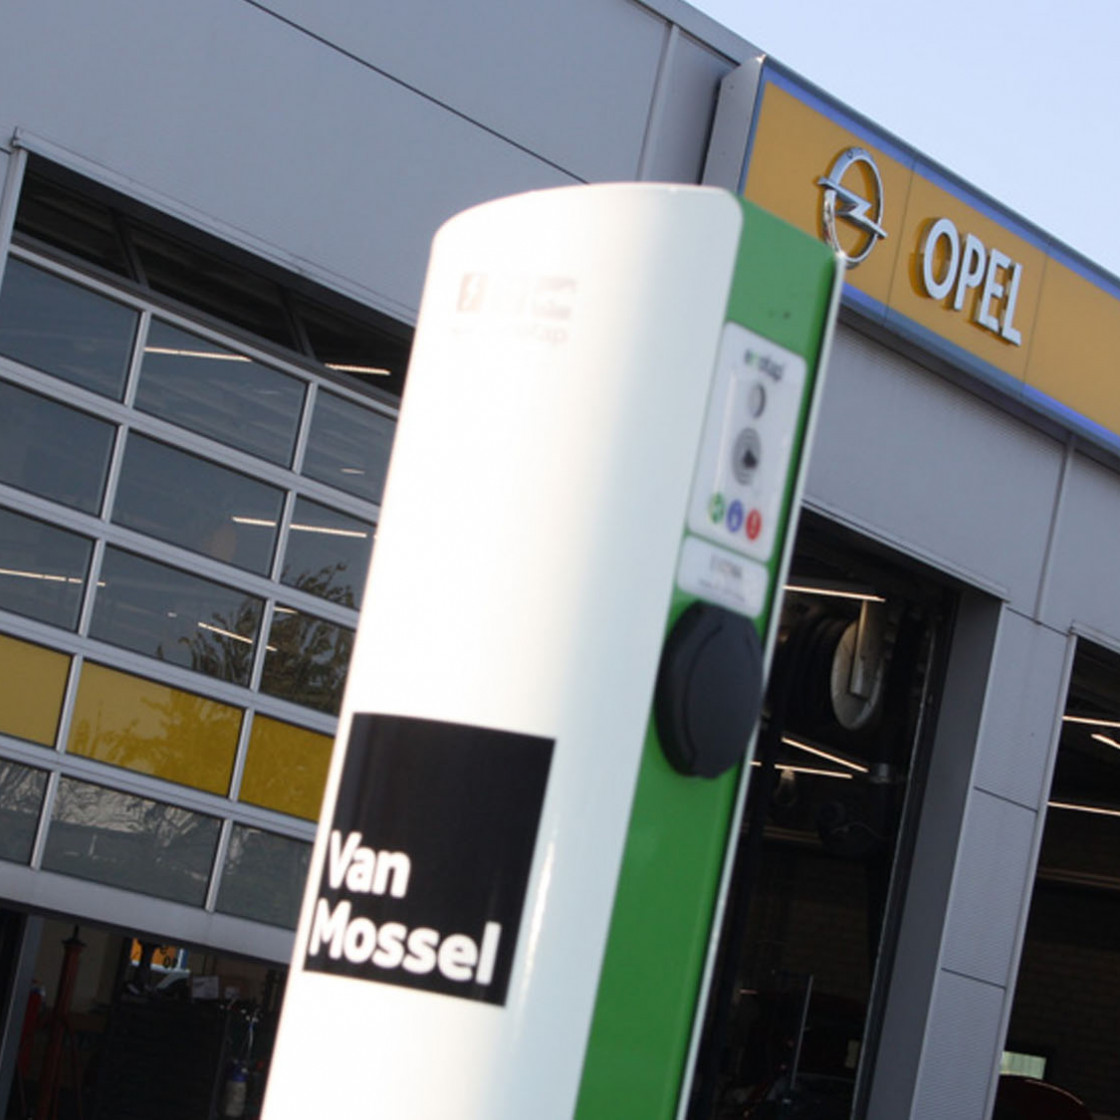 VanMossel Opel onderhoud 2000x1125 II